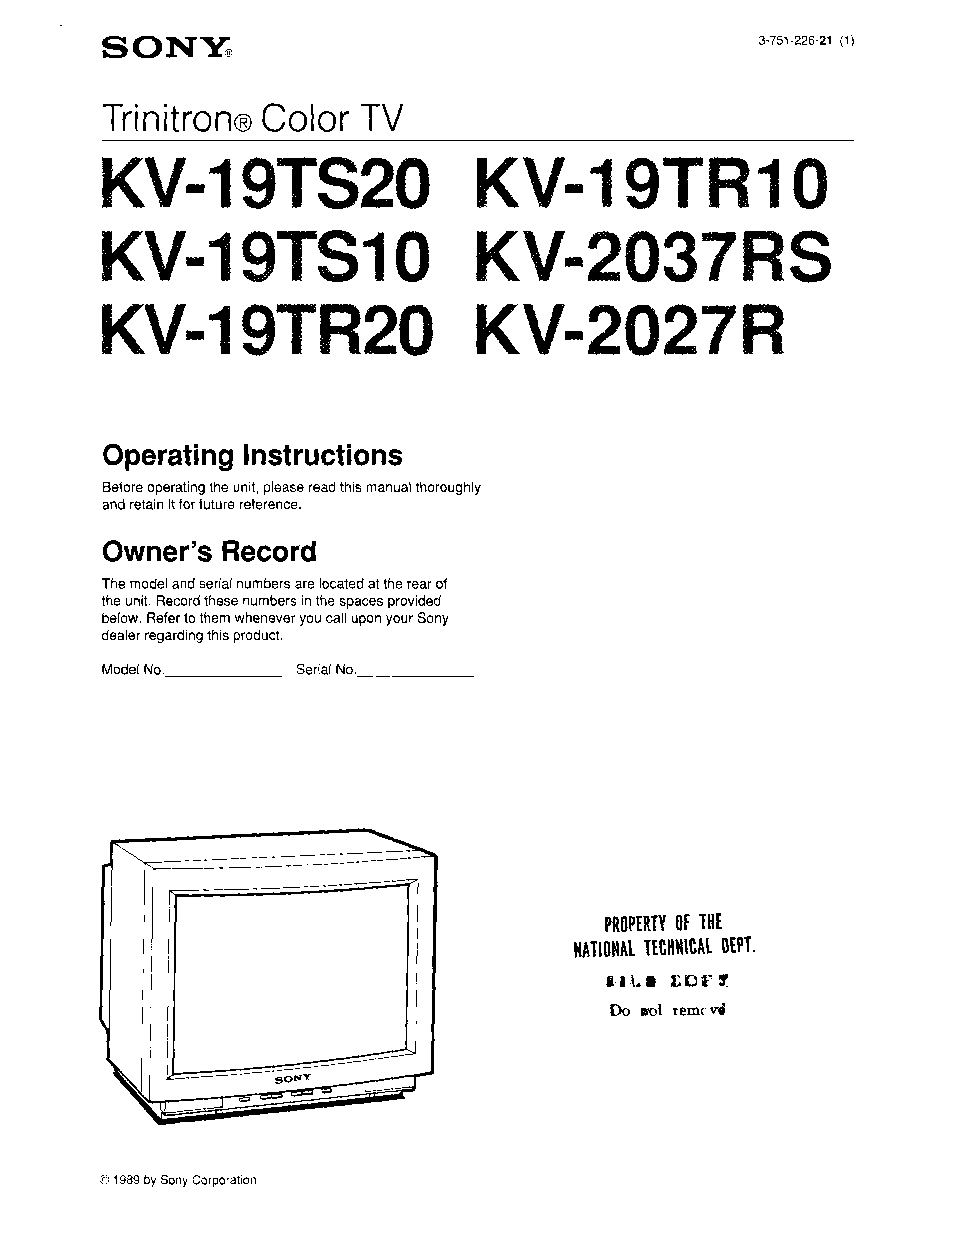 Sony KV-19TR10, KV-19TR20, KV-19TS10, KV-2027R, KV-2037RS Operating Instruction